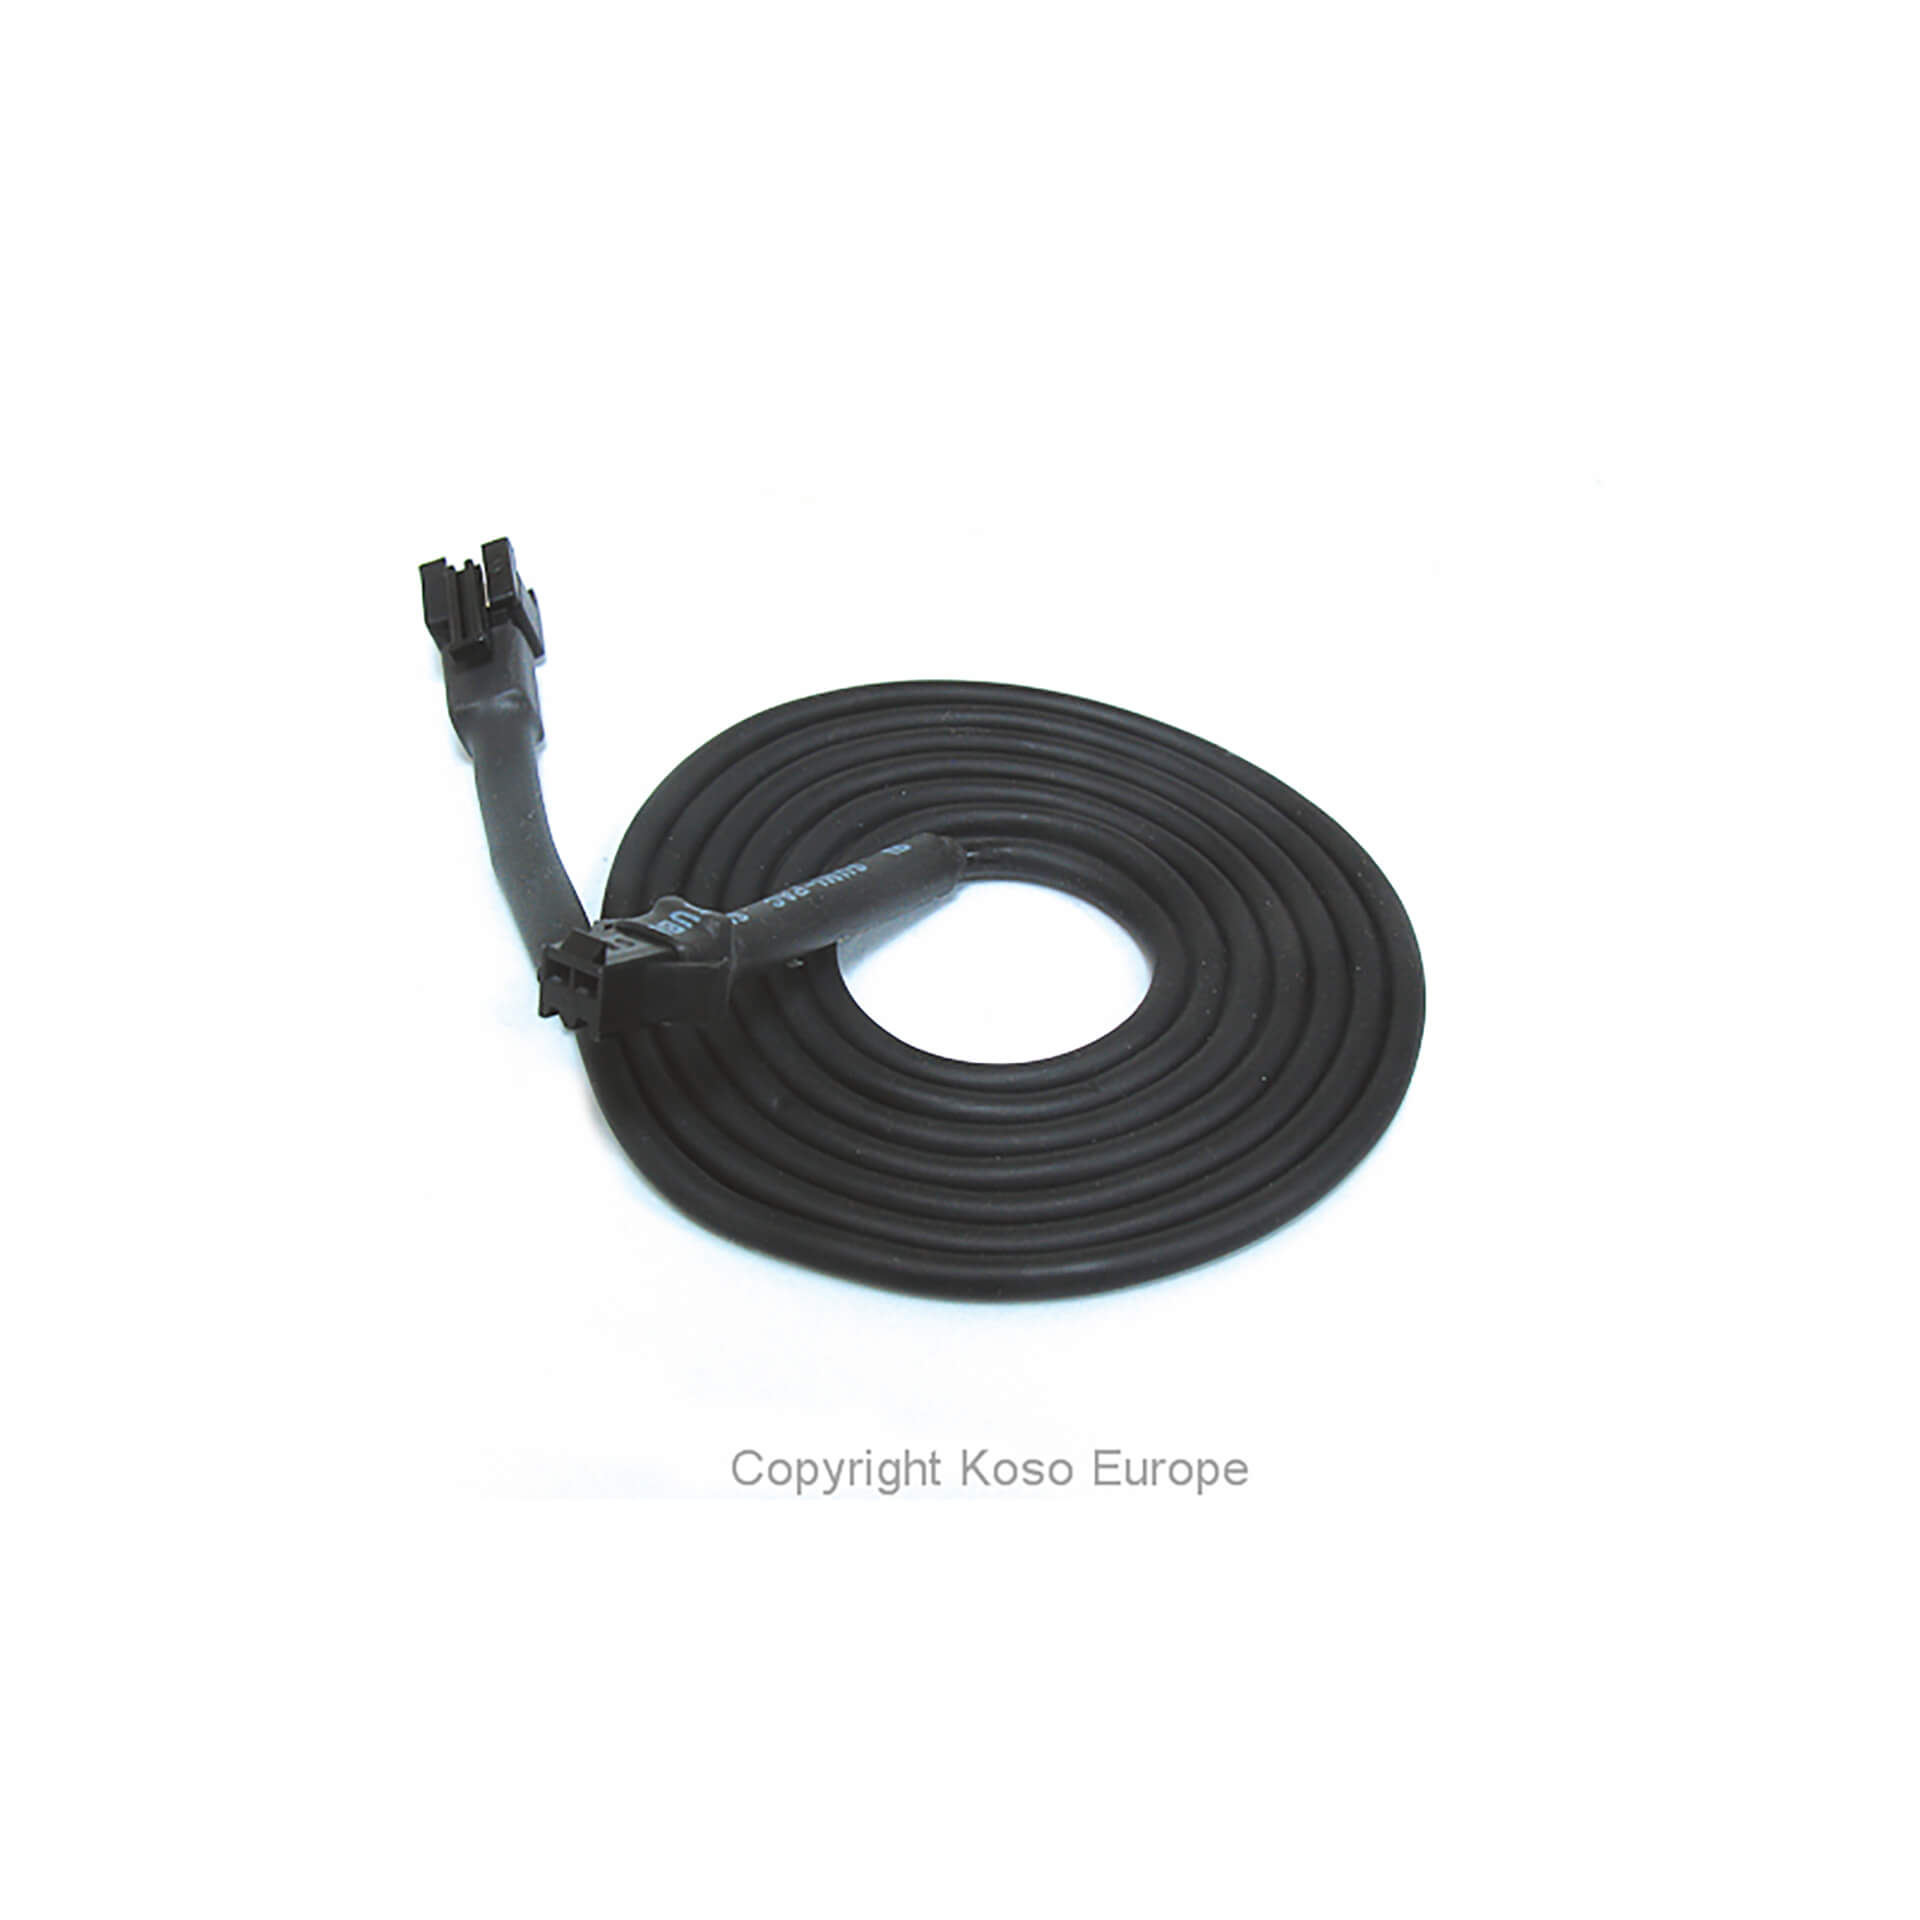 koso Cable for temperature sensor 1 meter, black or white plug